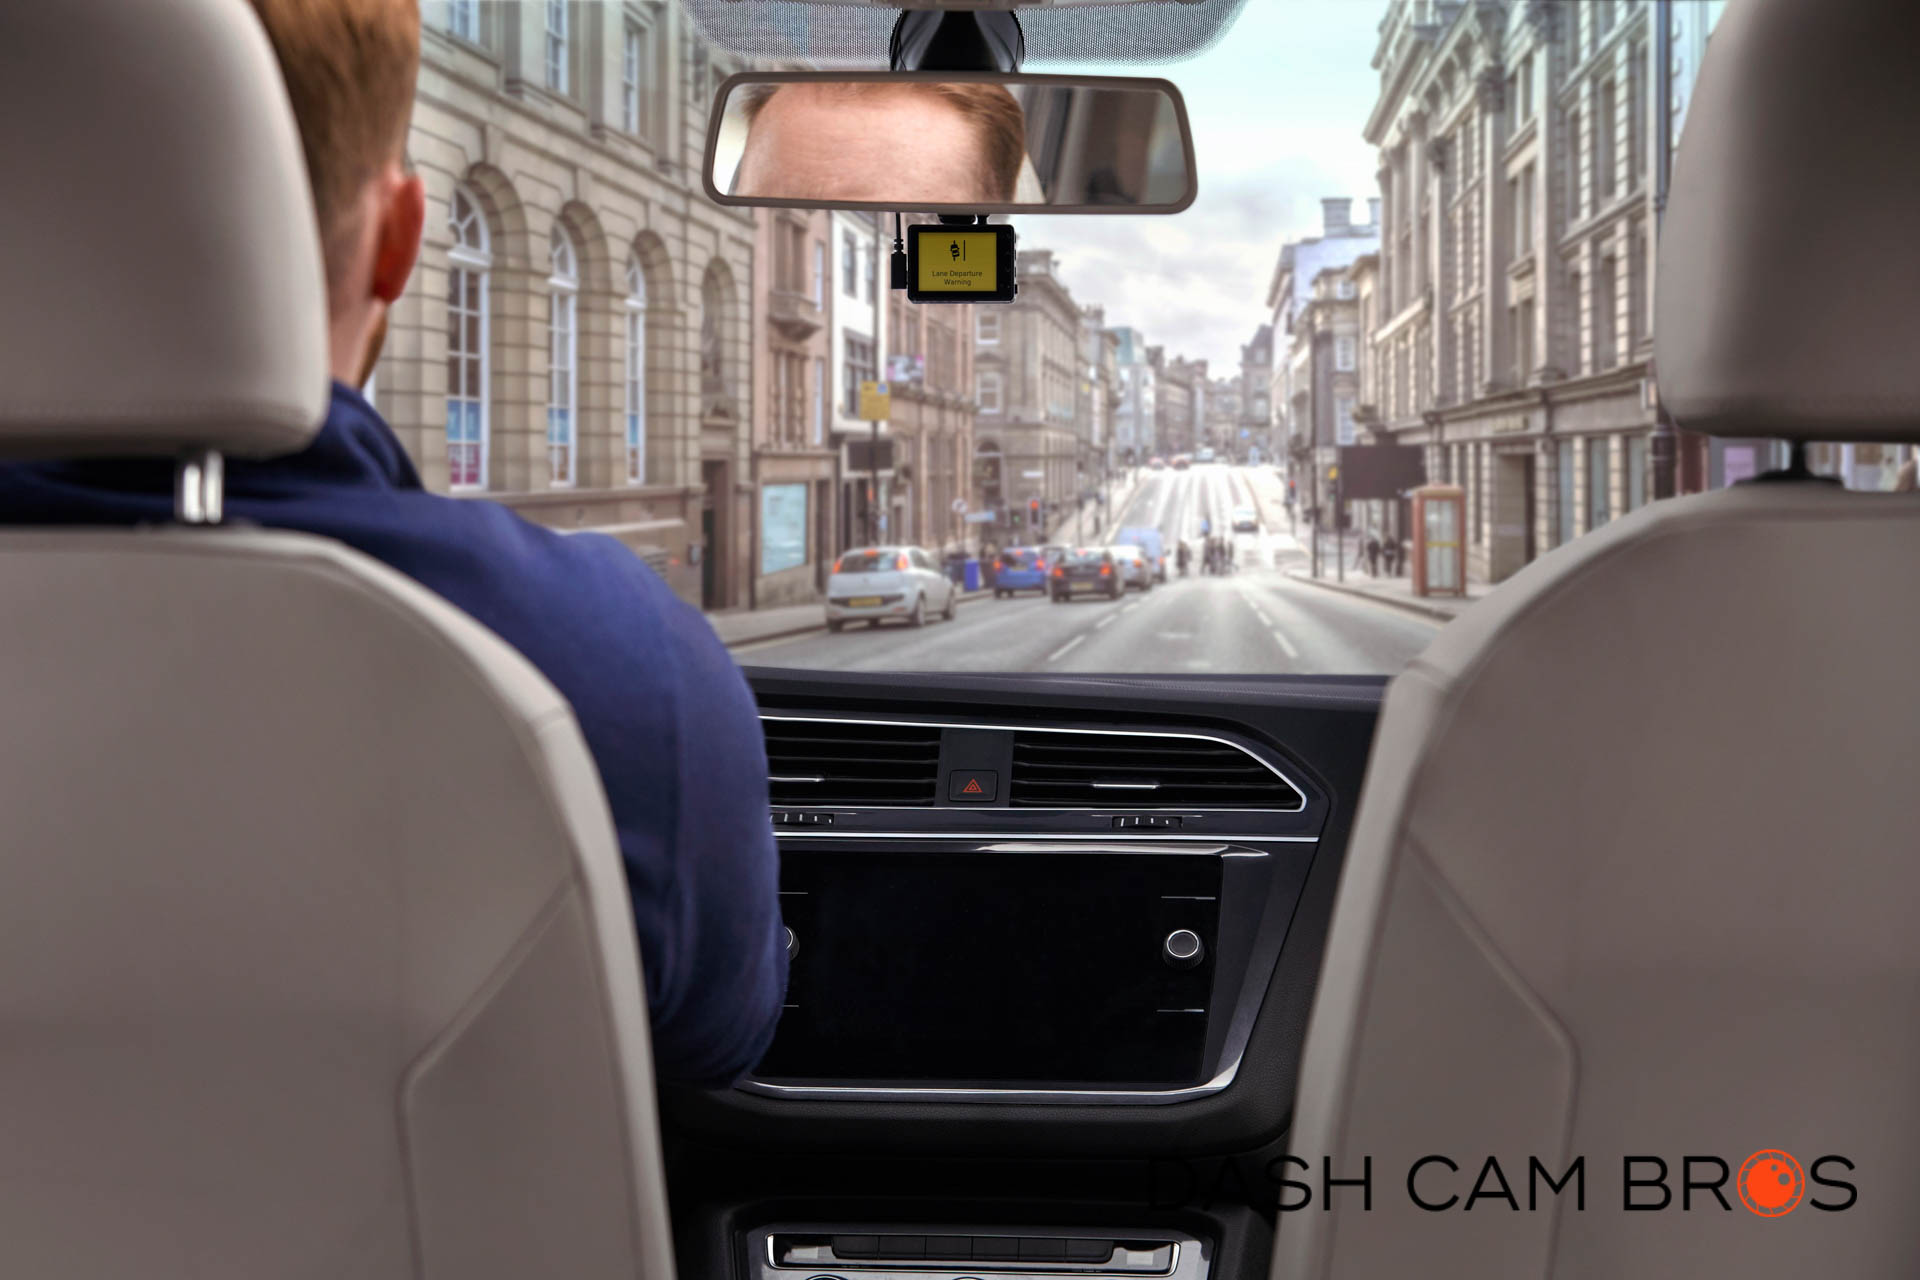 Shop Garmin Dash Cam 57 2K Recording W/ WiFi & GPS